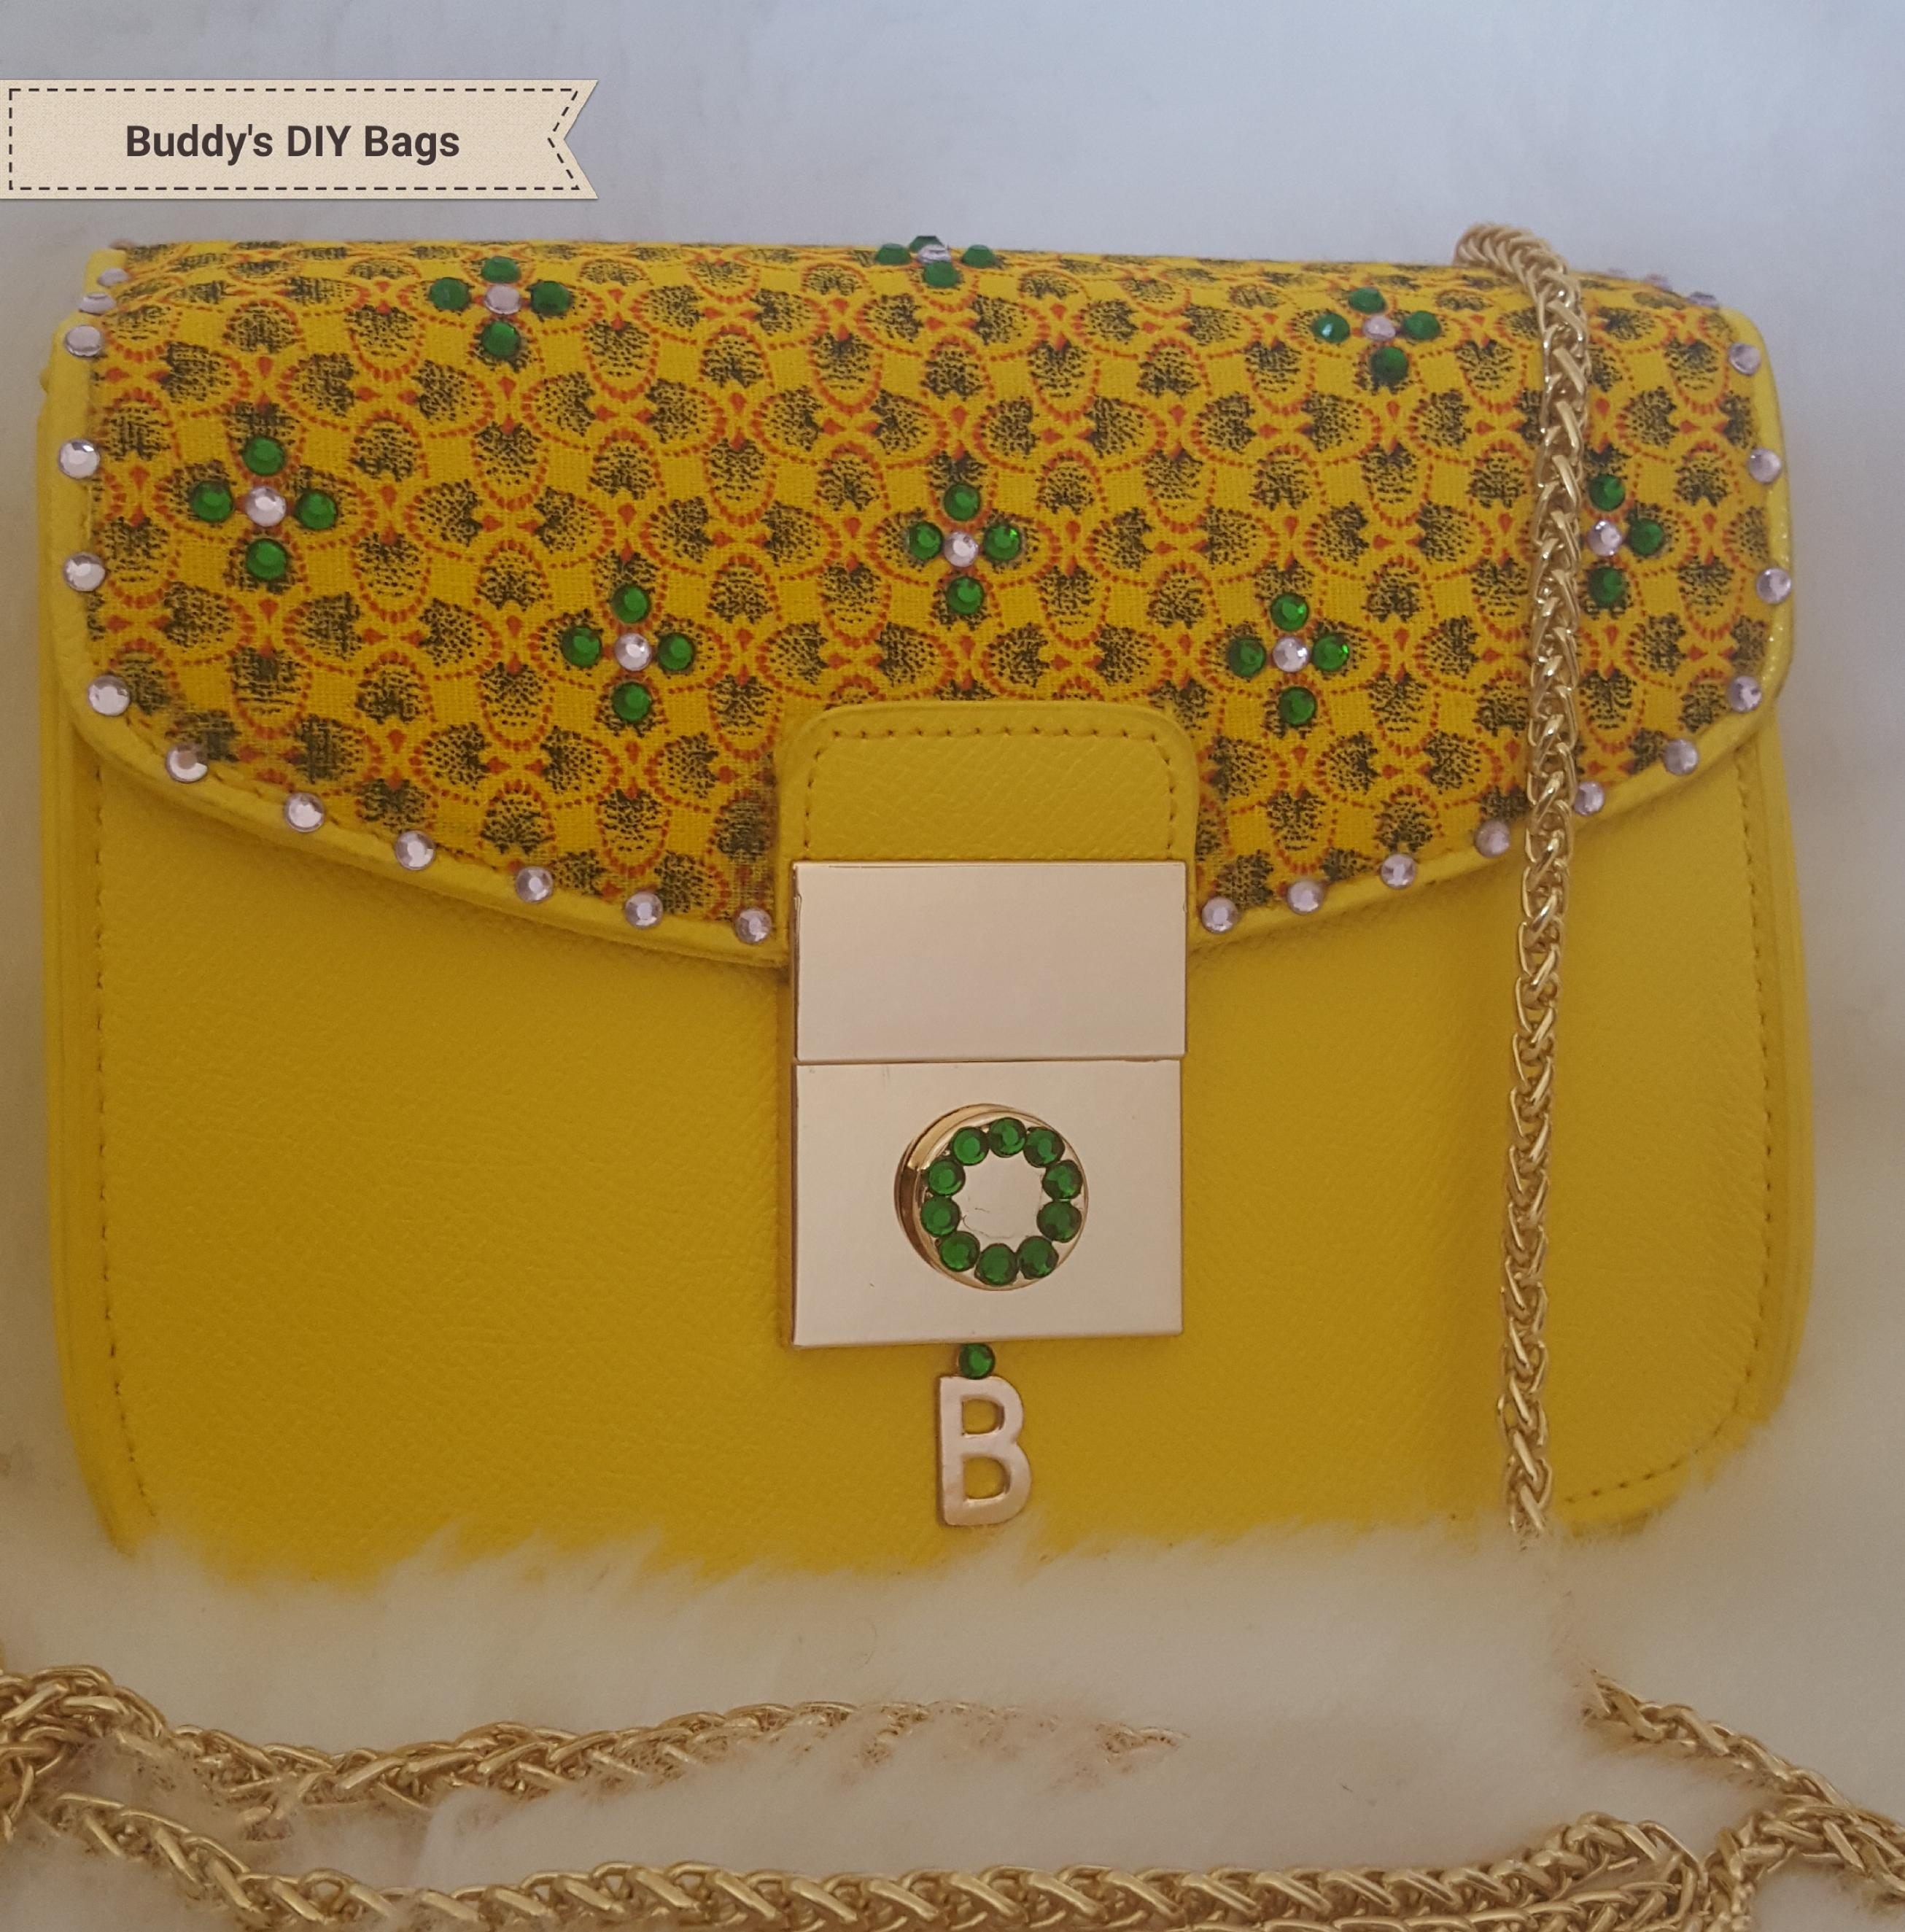 My bag make over ♡
#buddysdiybags #withatouchofafrica